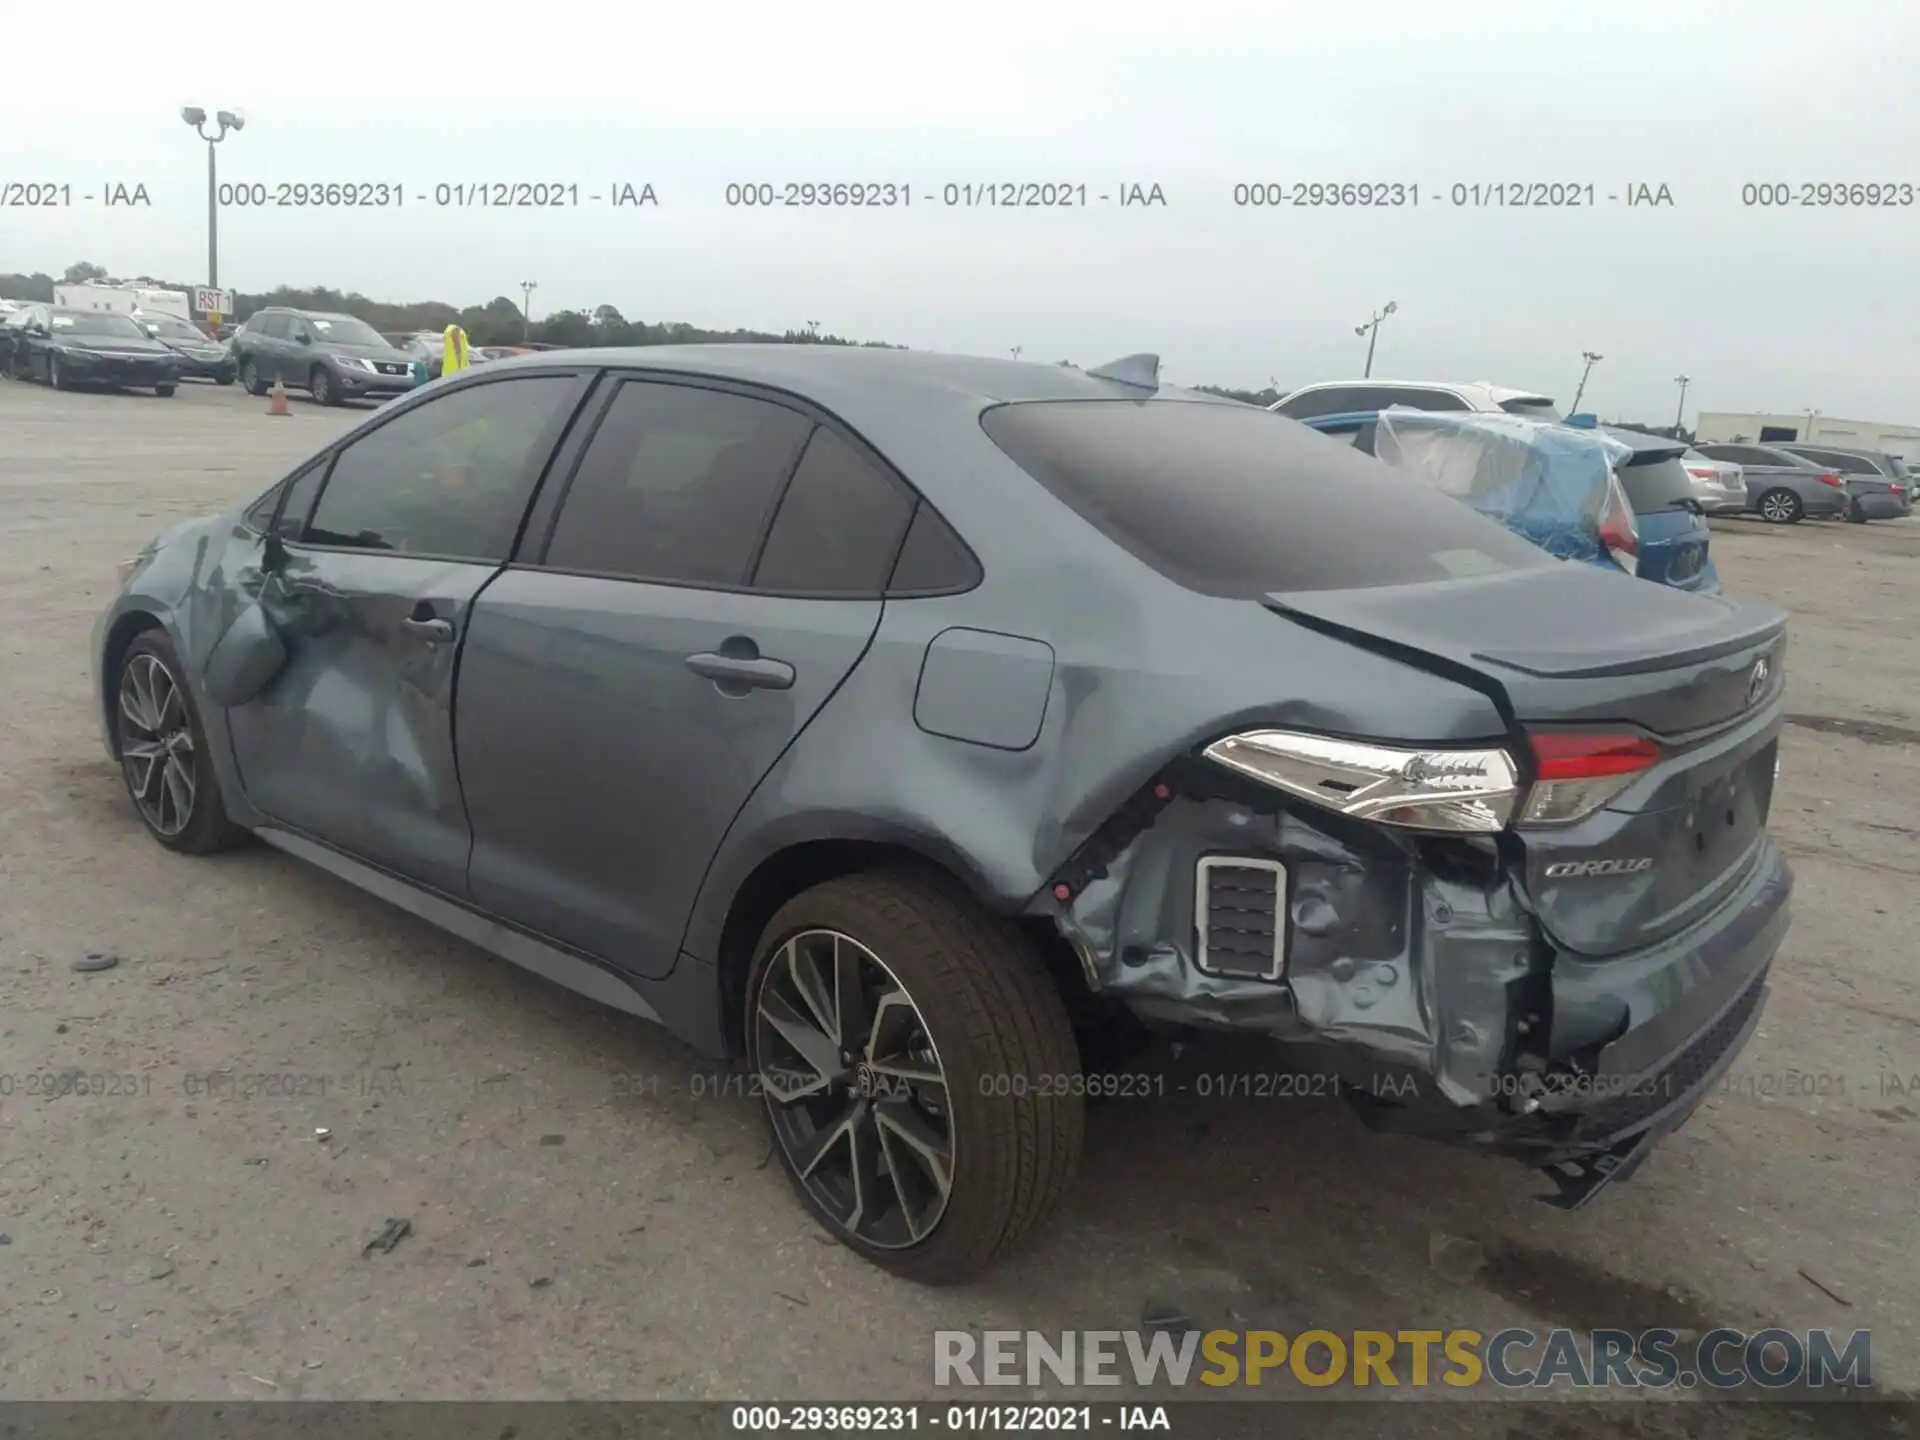 3 Photograph of a damaged car JTDS4MCEXMJ064848 TOYOTA COROLLA 2021